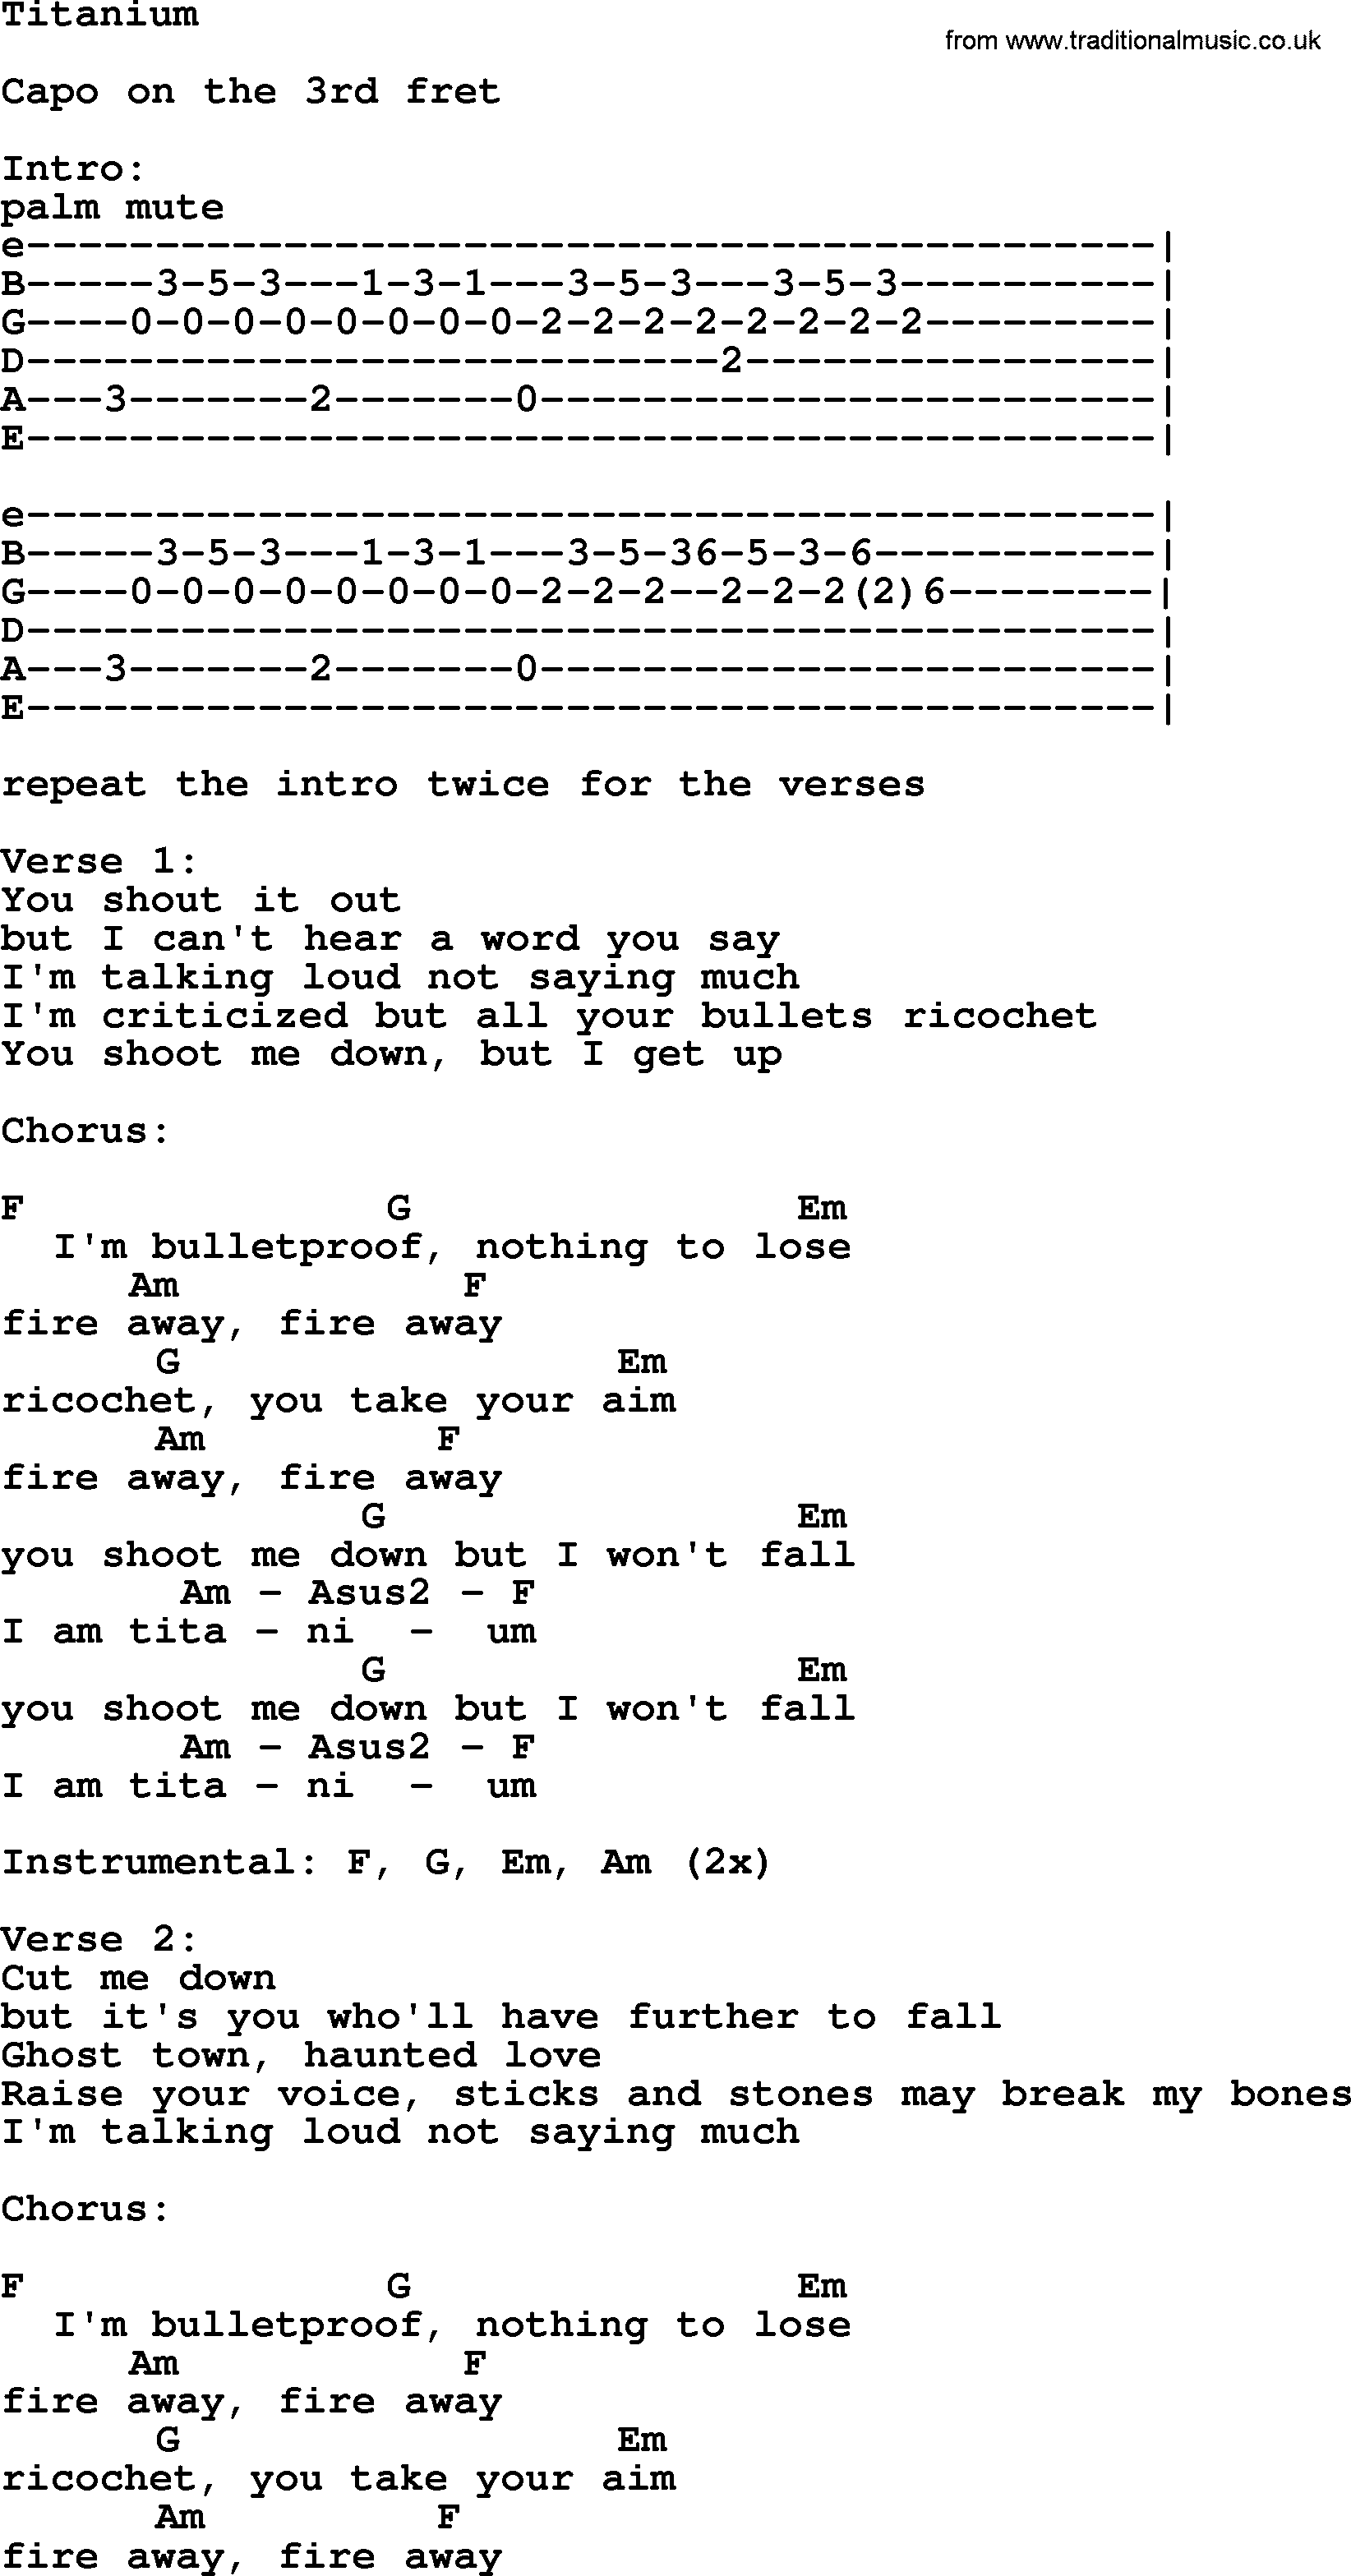 Kris Kristofferson song: Titanium lyrics and chords